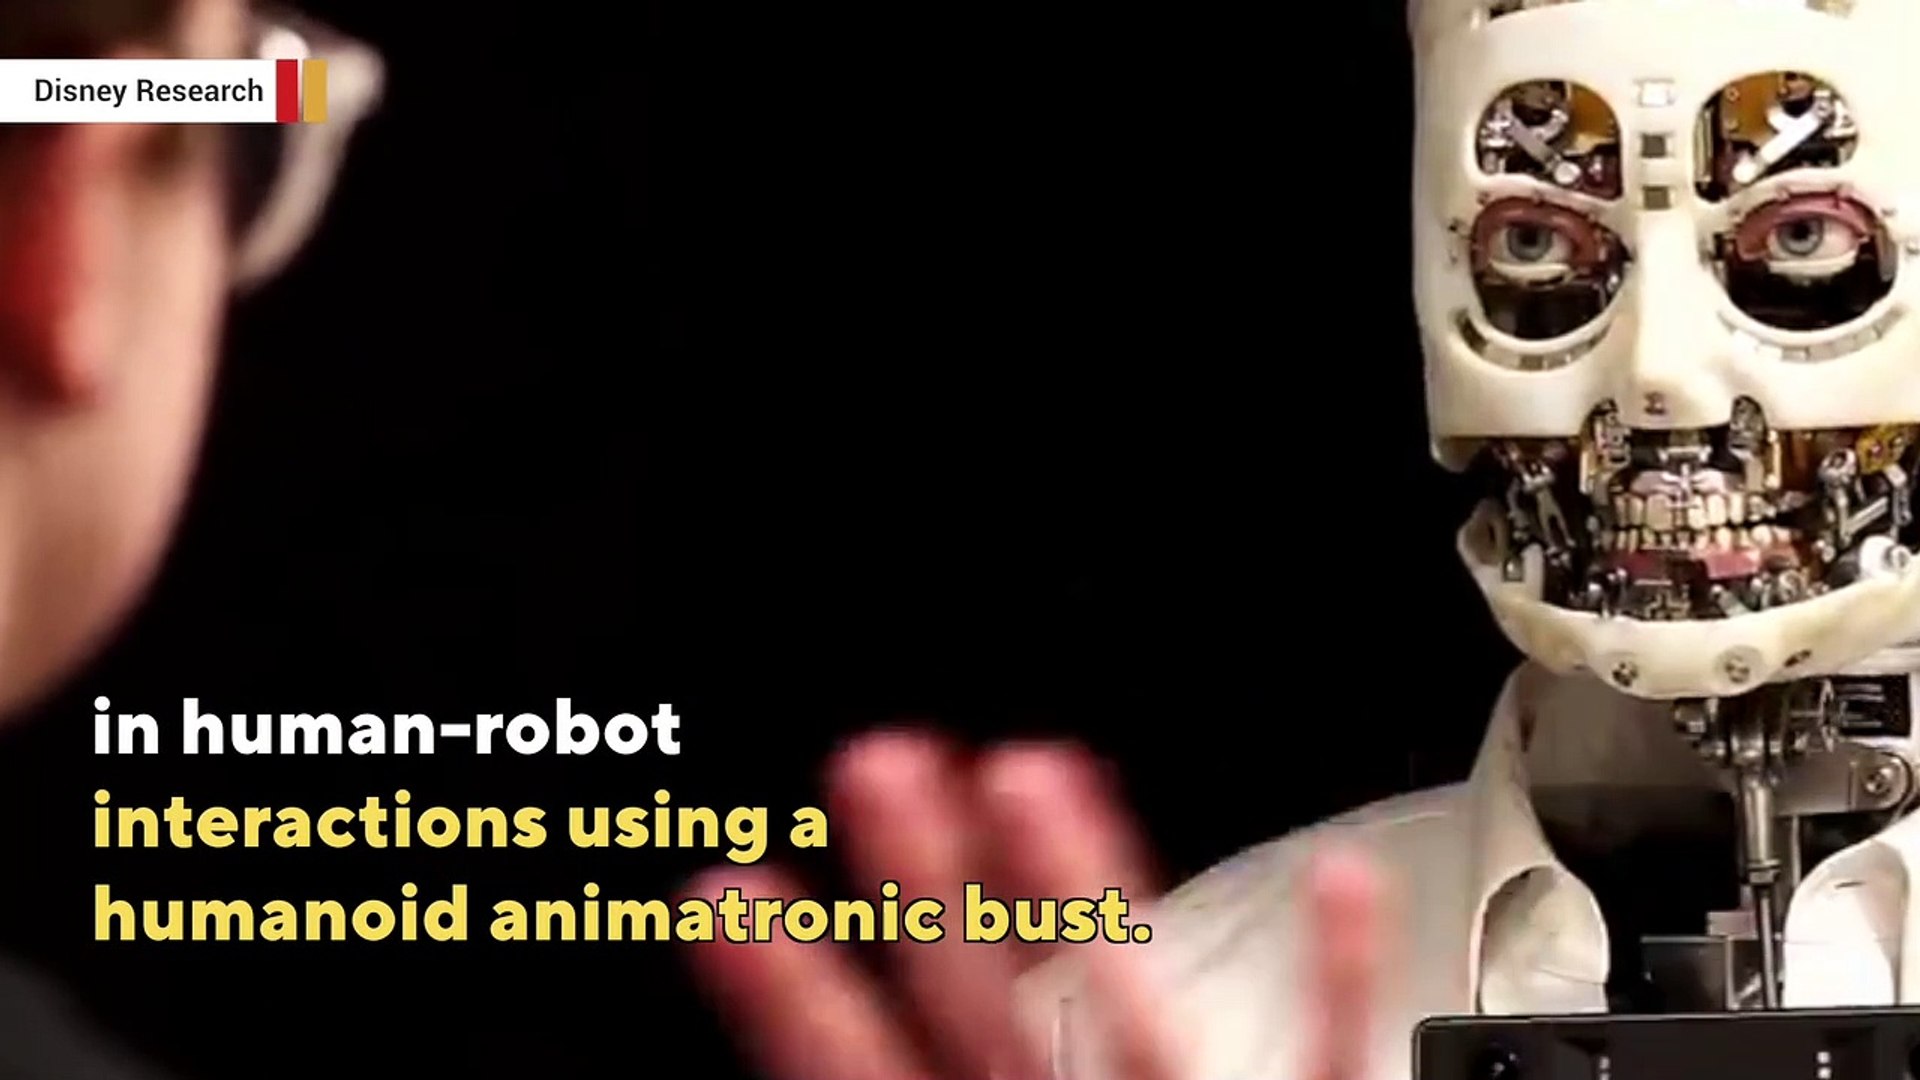 Disney reveals Robot with Human Gaze